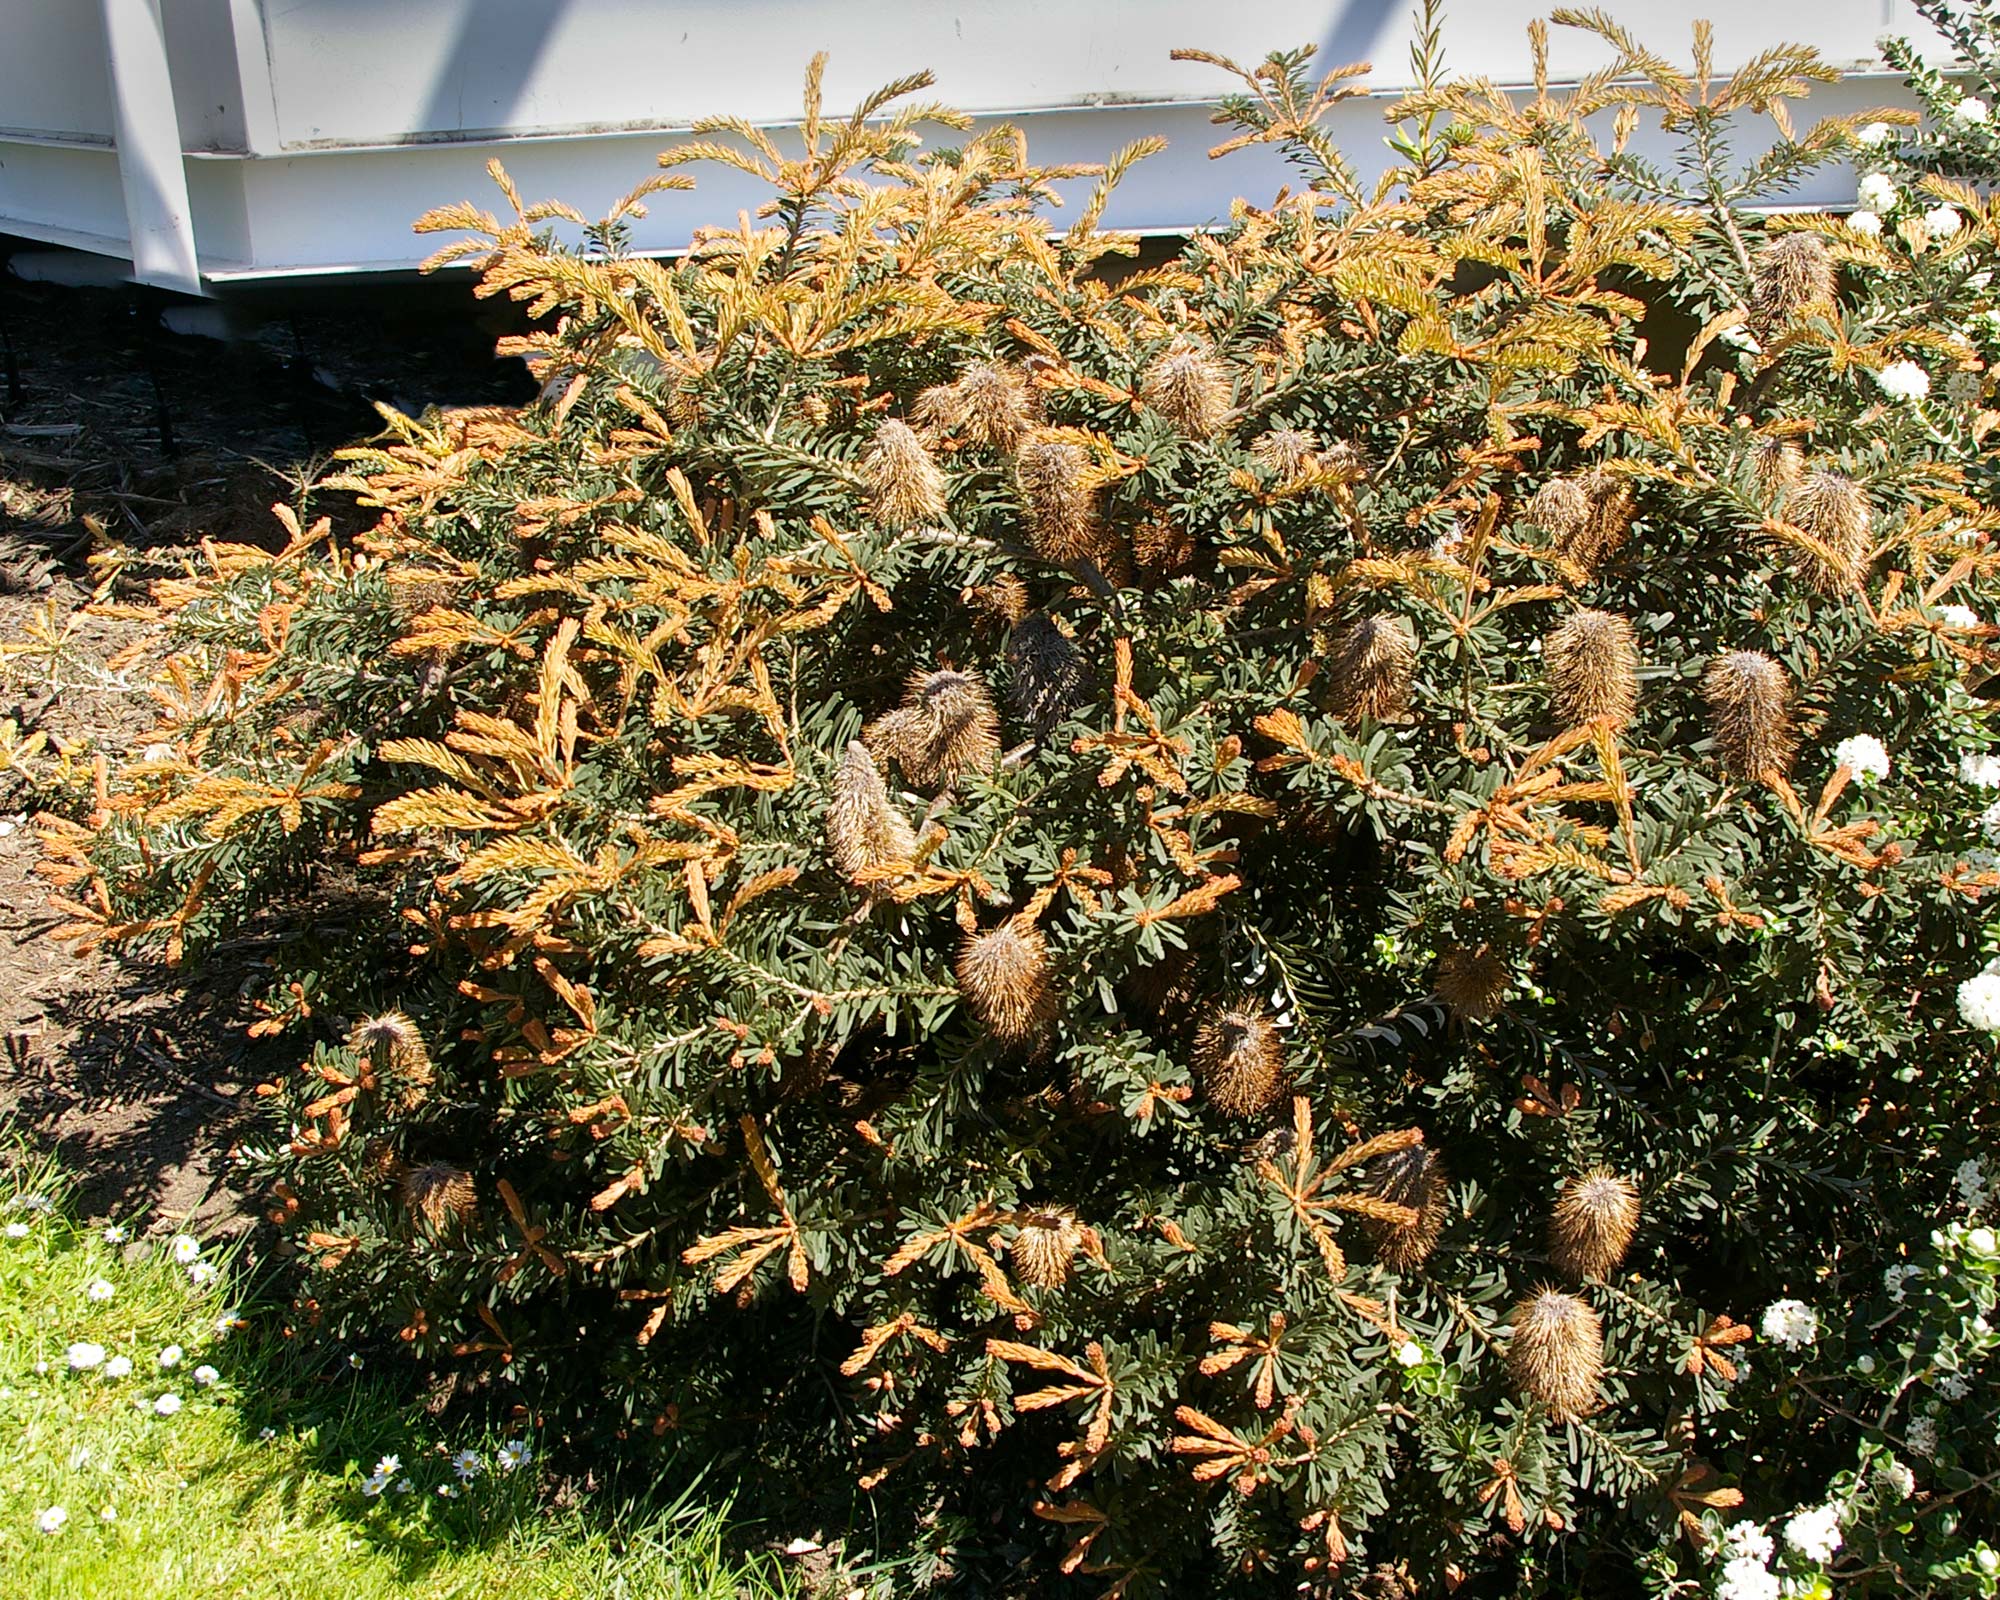 Banksia marginata 'Coastal Spread'- new spring growth